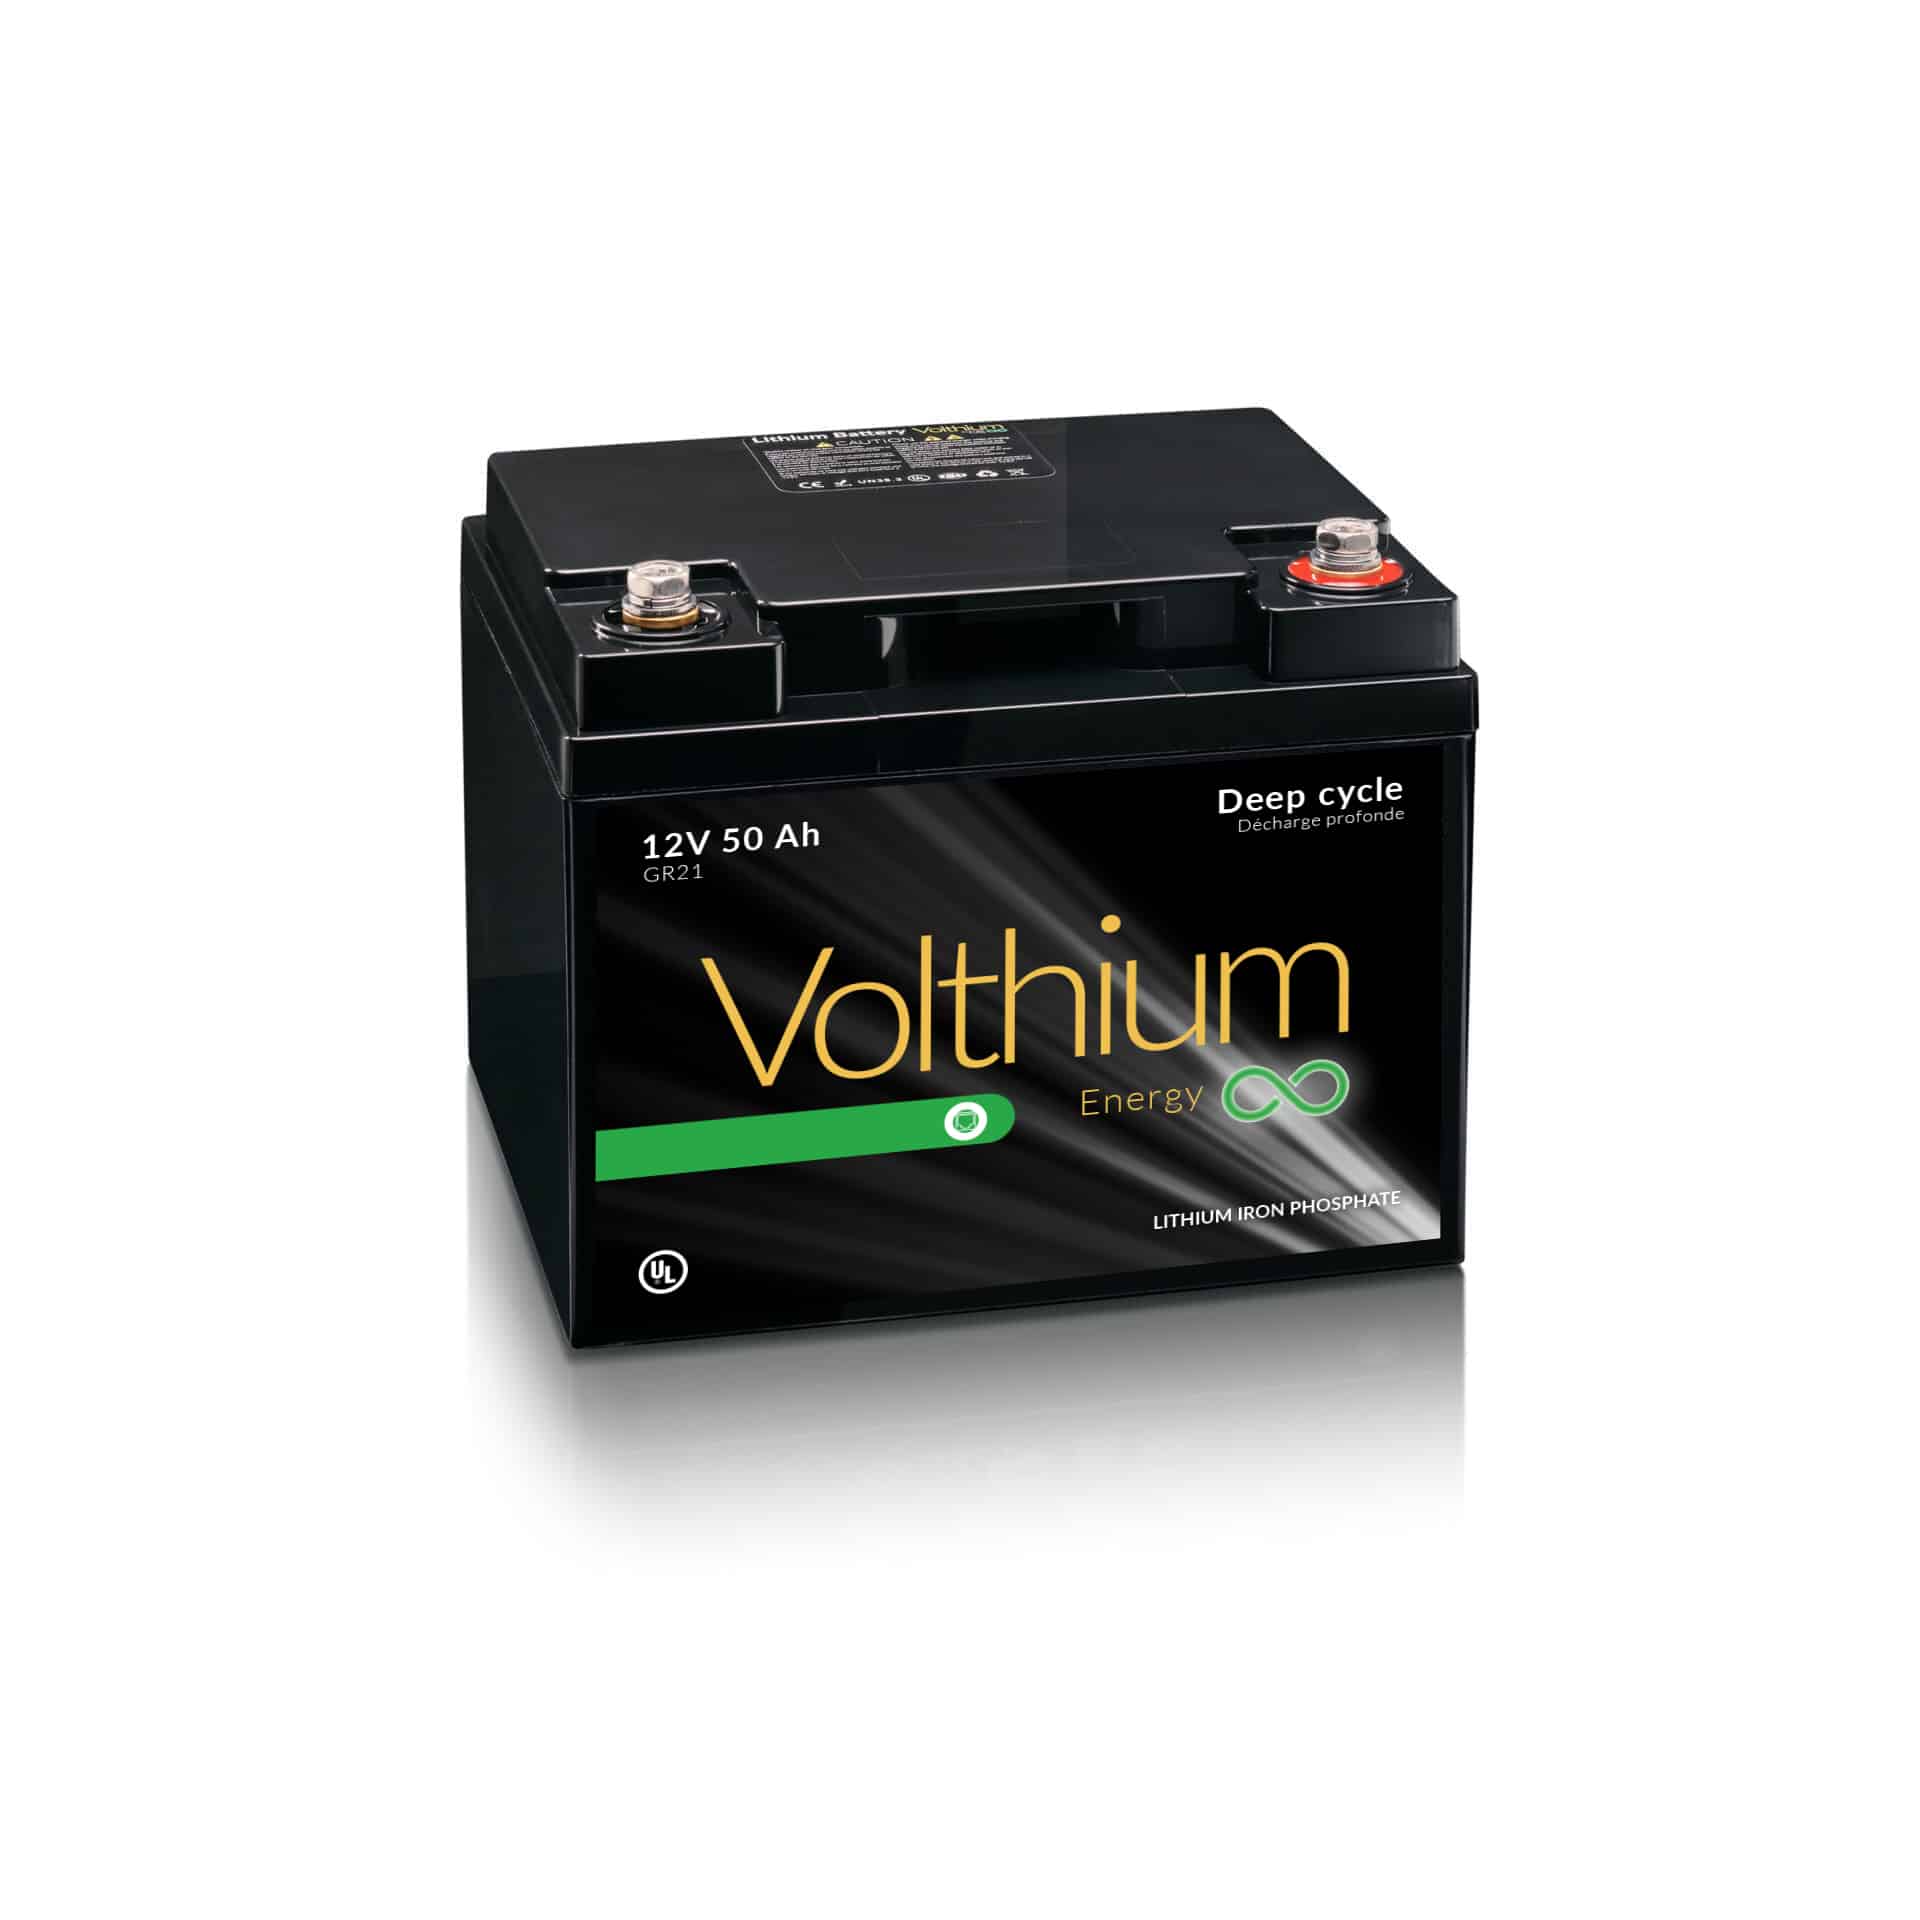 12V 50AH Battery - Volthium